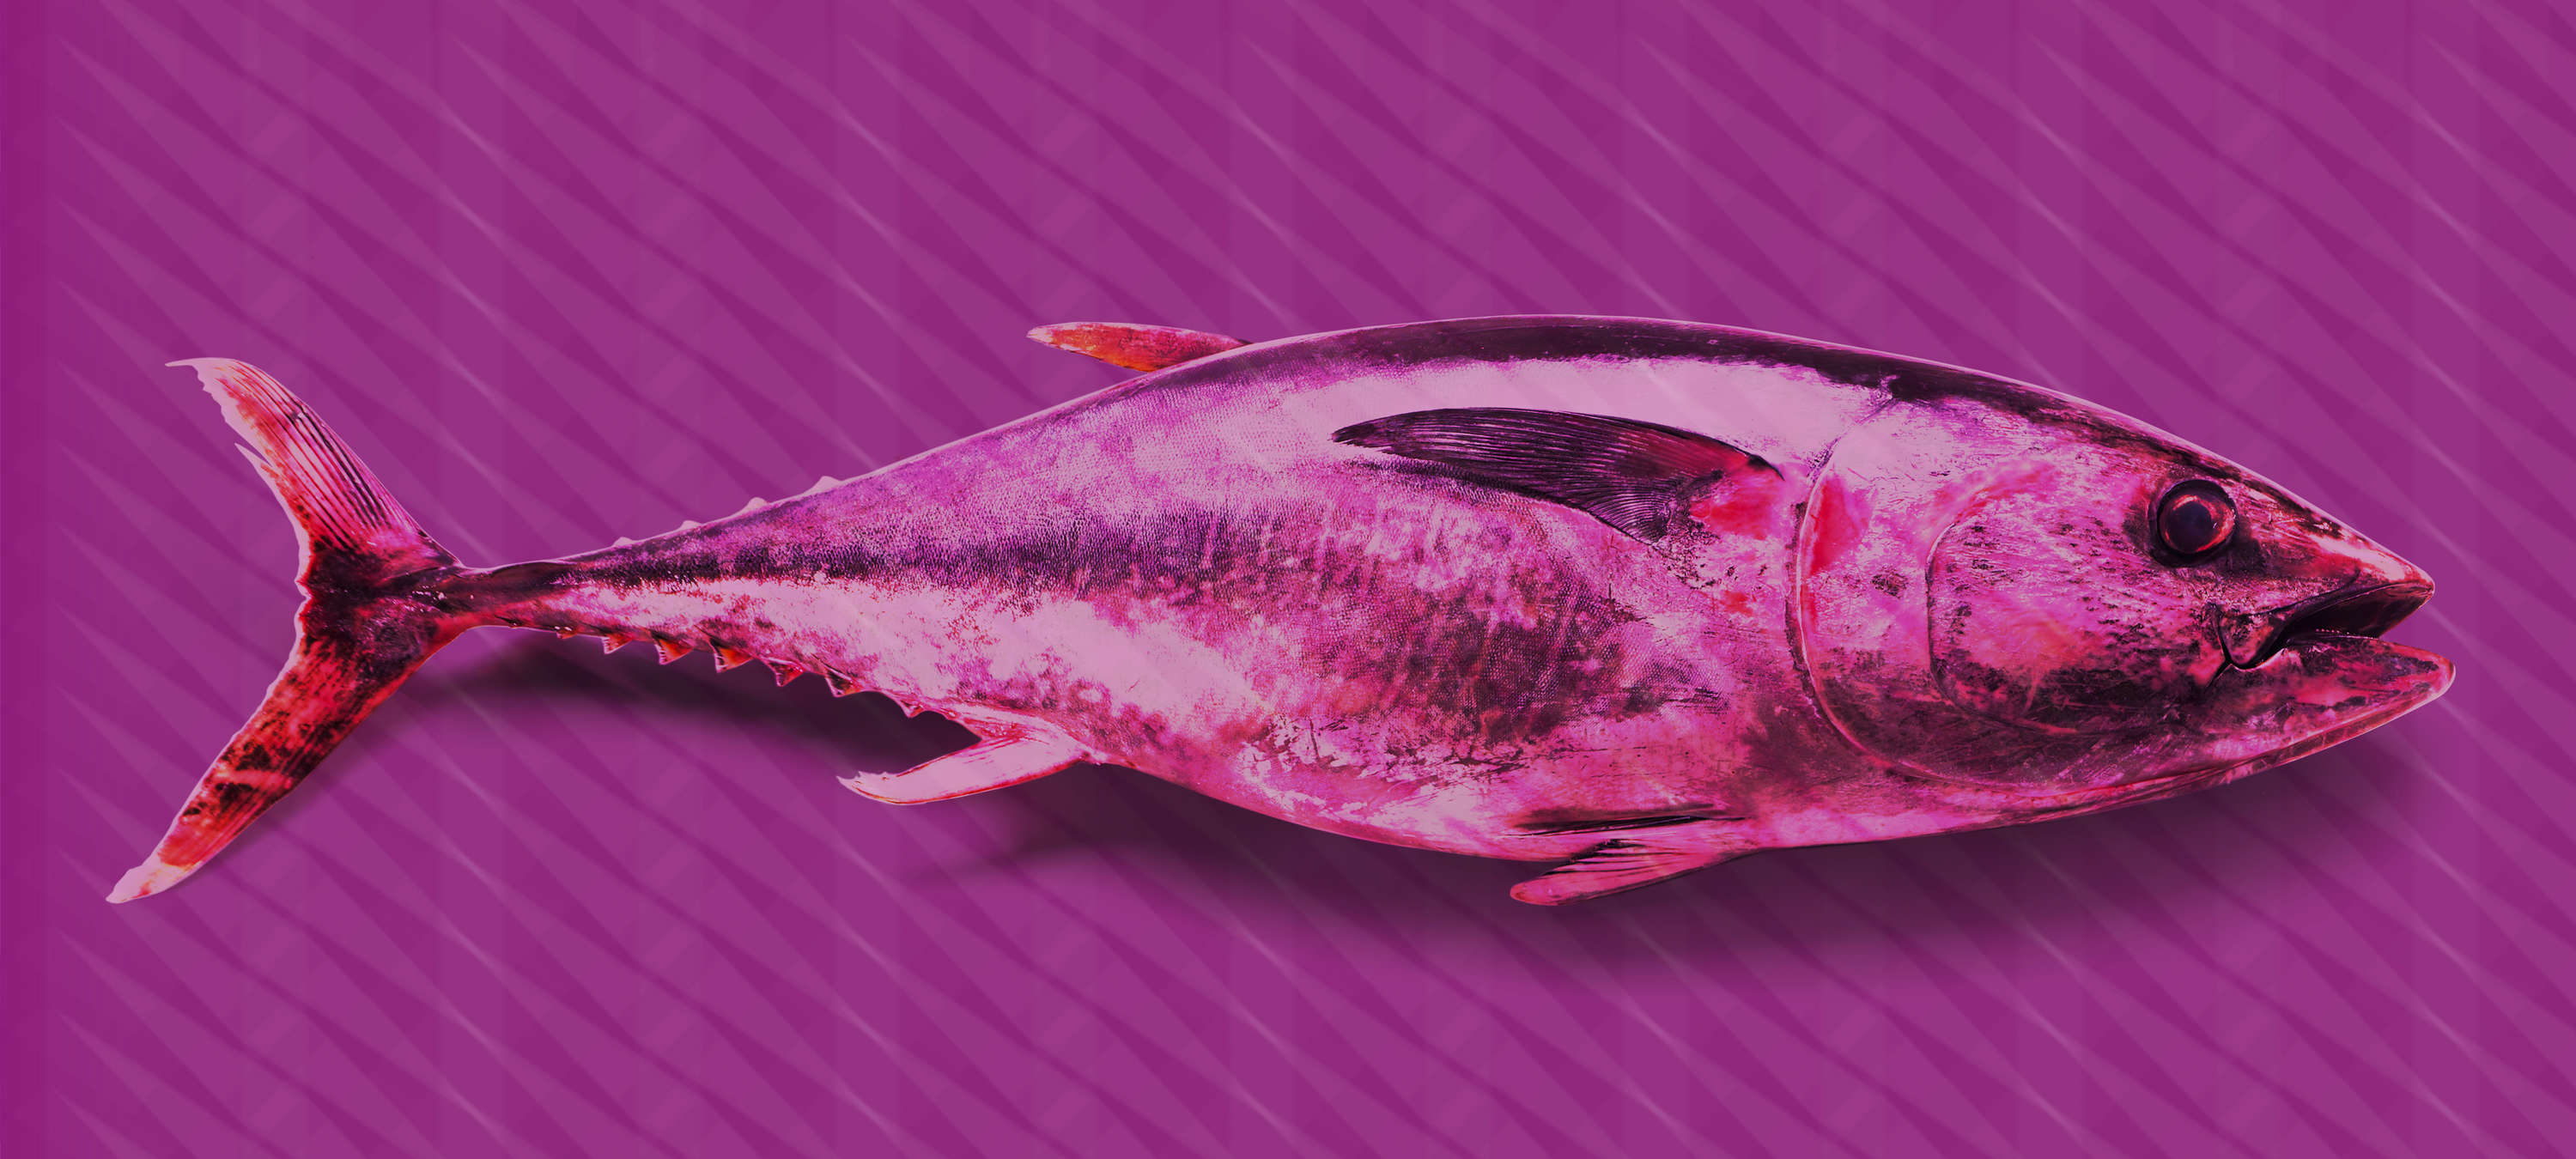             Pop art style tuna mural - purple, pink, red
        